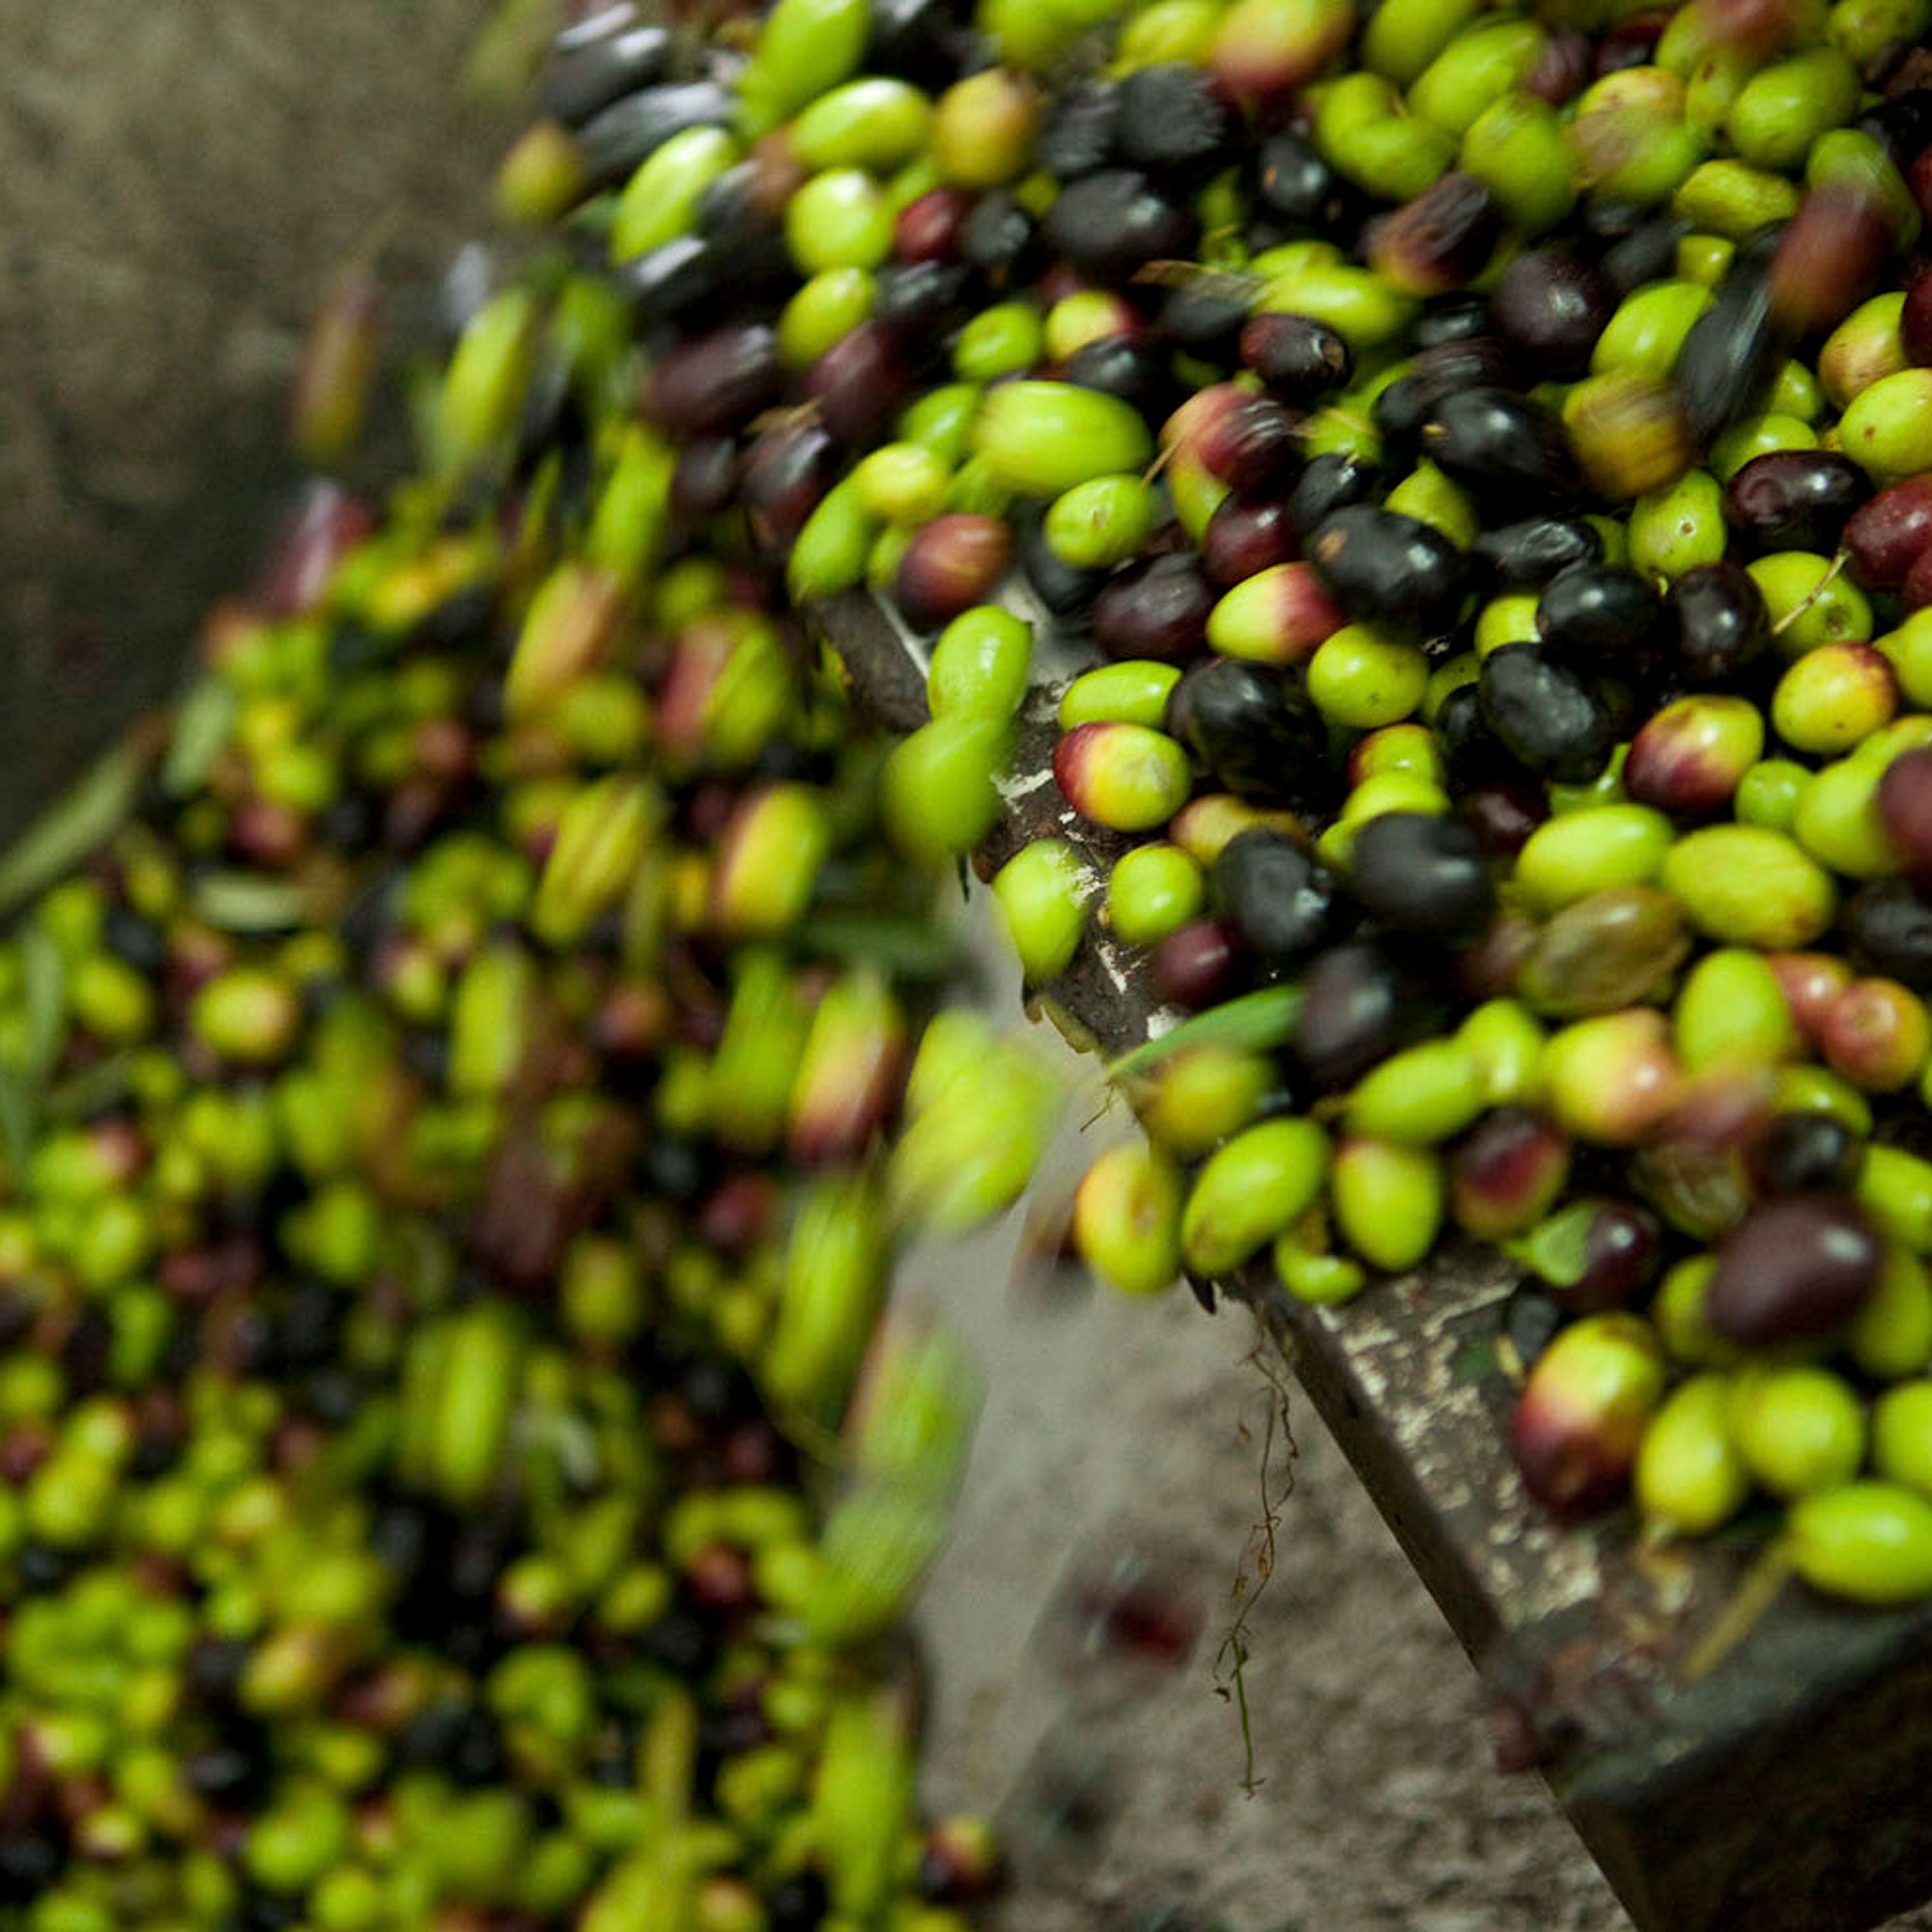 Olio extra vergine di oliva monocultivar Biancolilla biologico